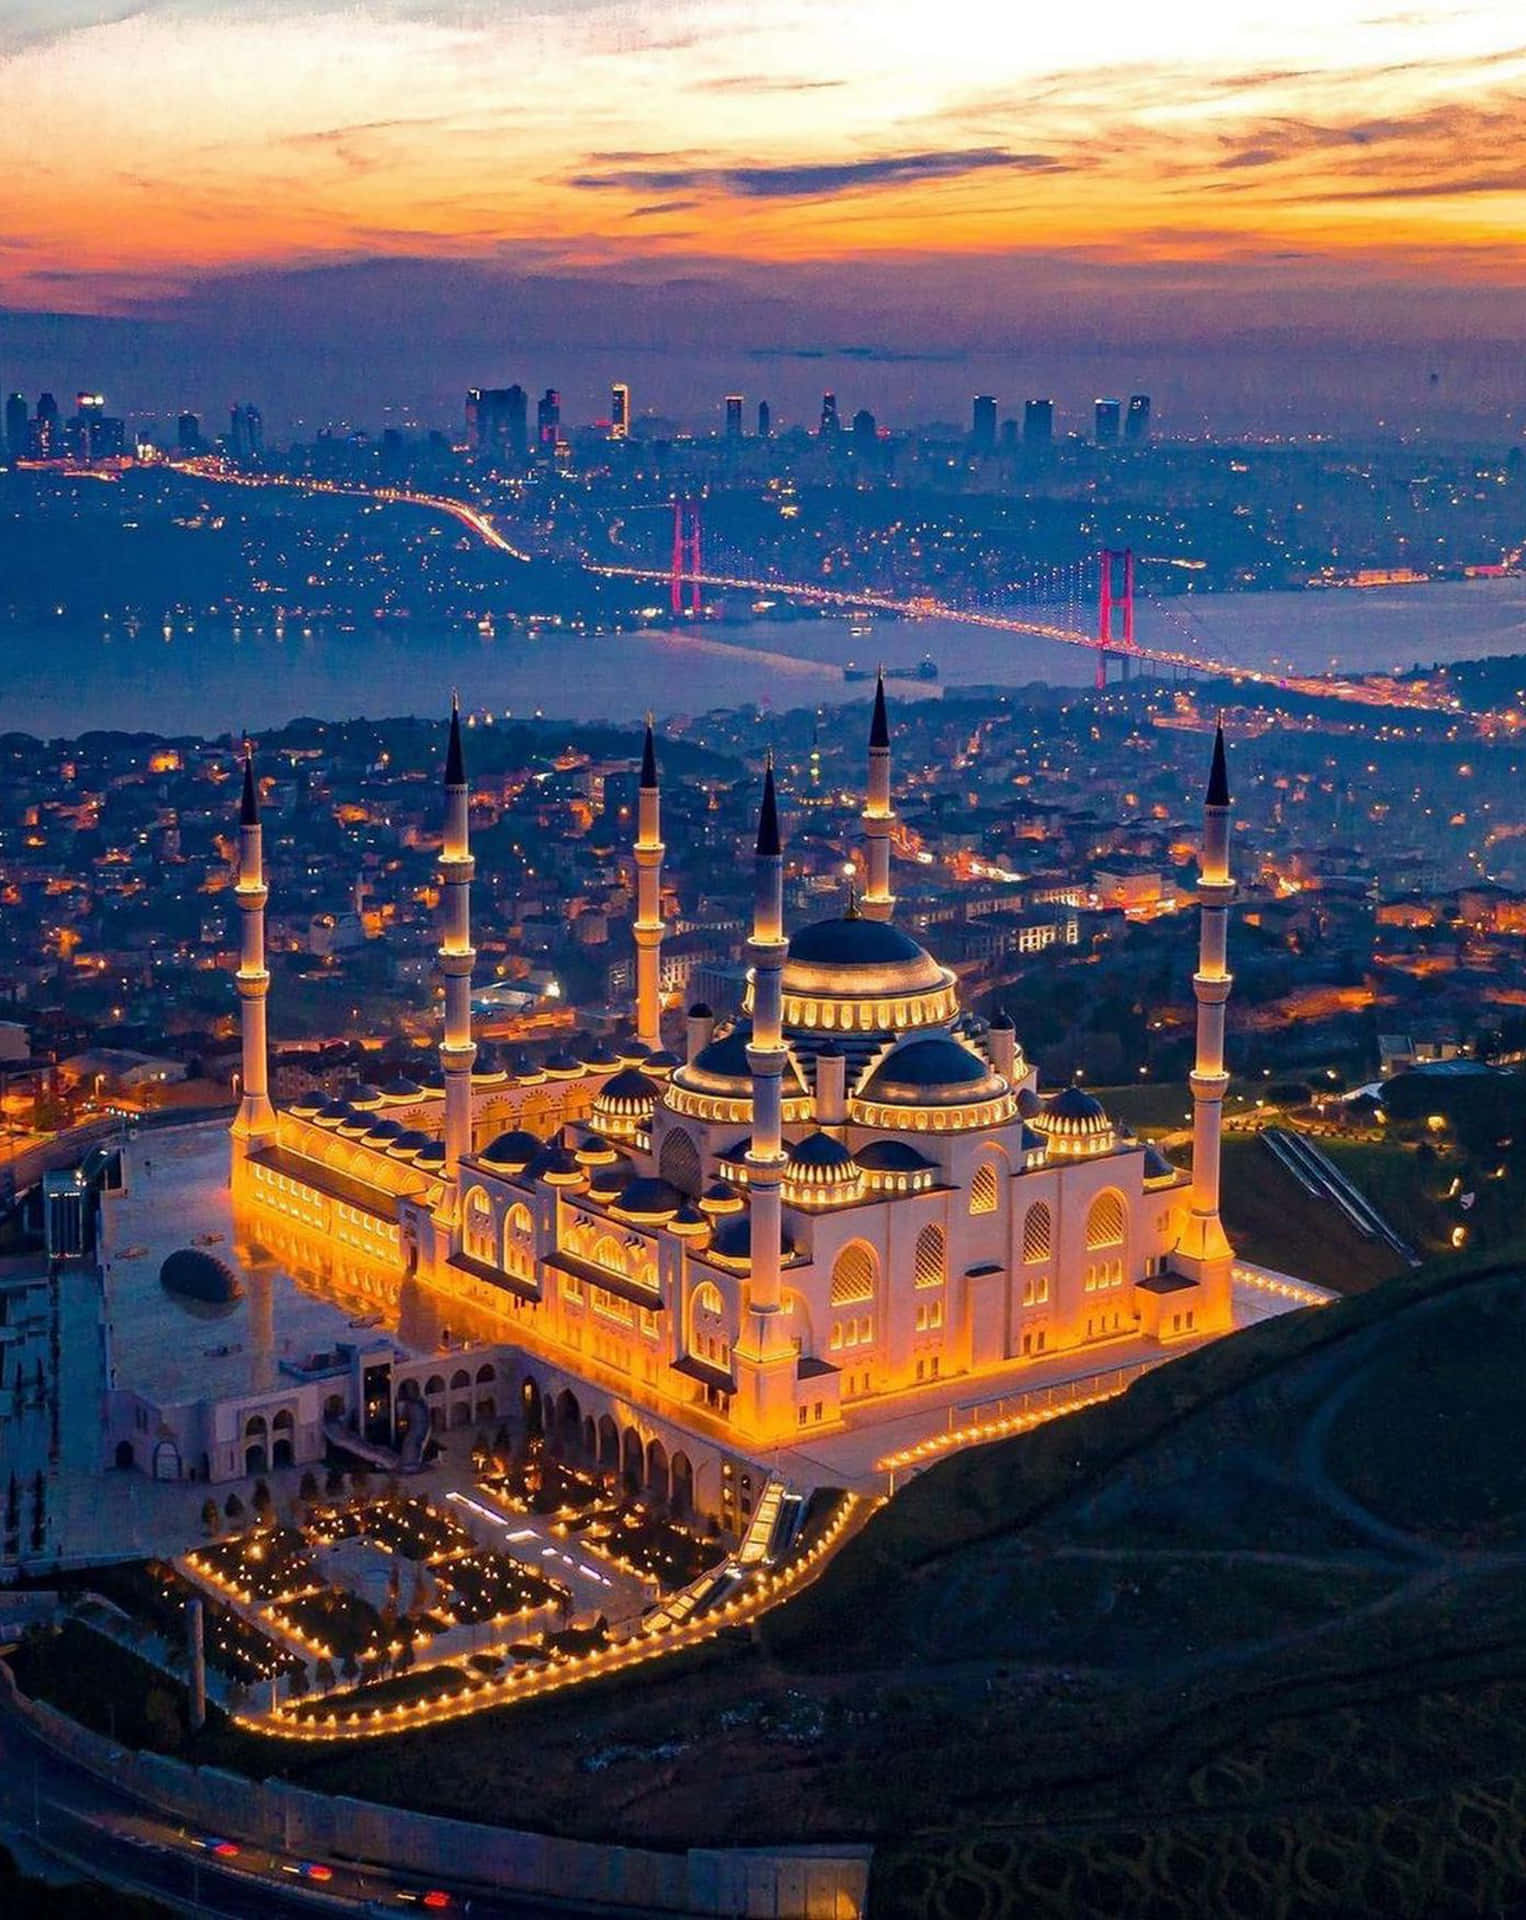 Ansichtdes Erleuchteten Jungfernturms In Istanbul, Türkei.